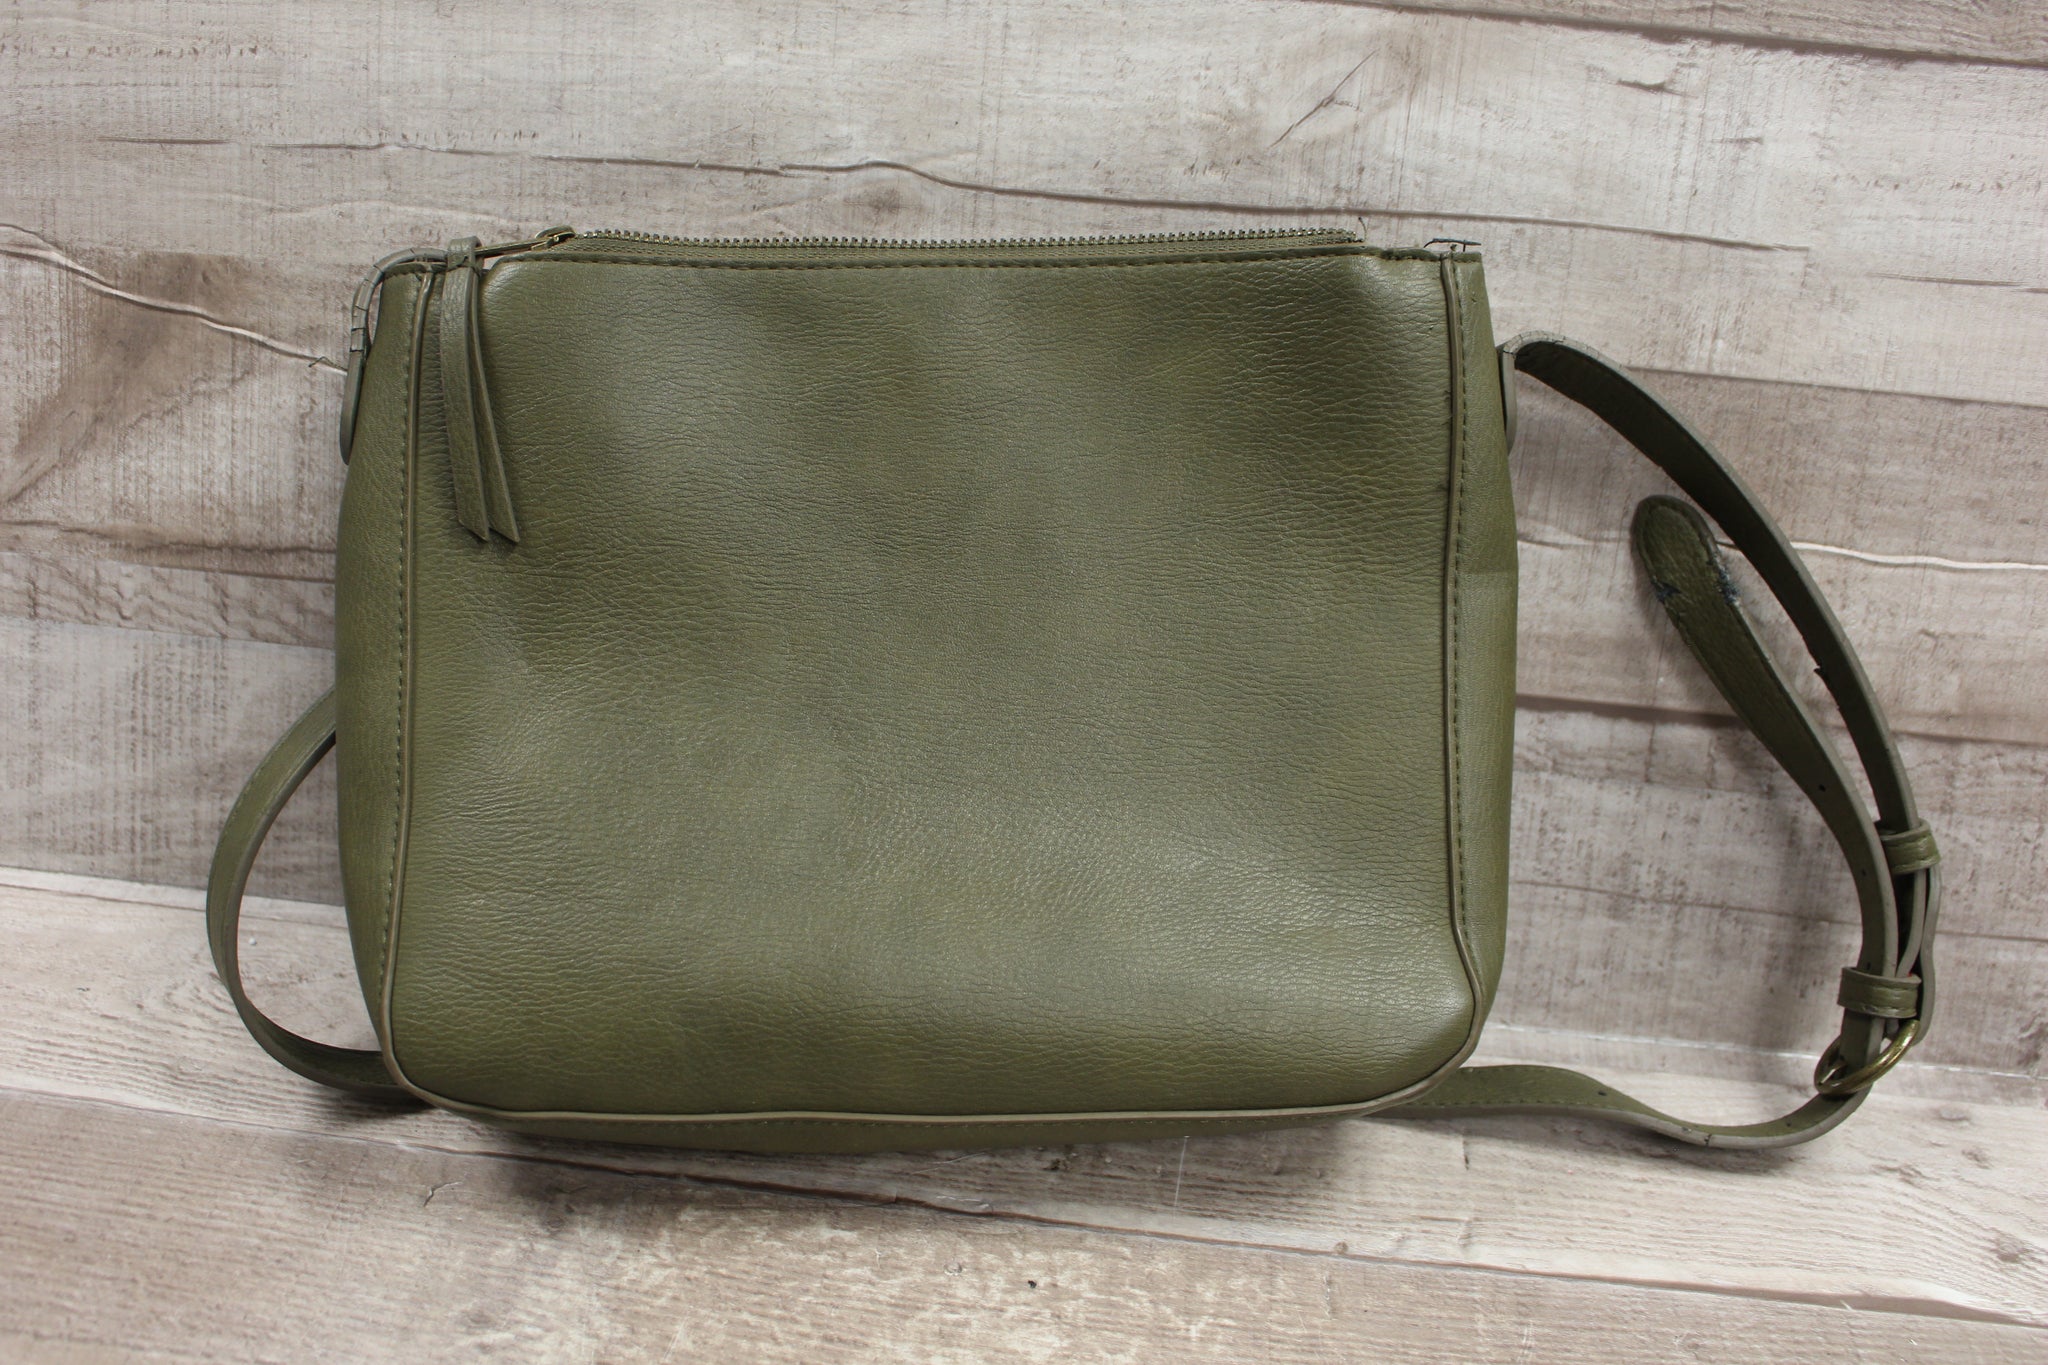 Buy PELLE LUXUR Olive Green Small Purse Handbag at Best Price @ Tata CLiQ